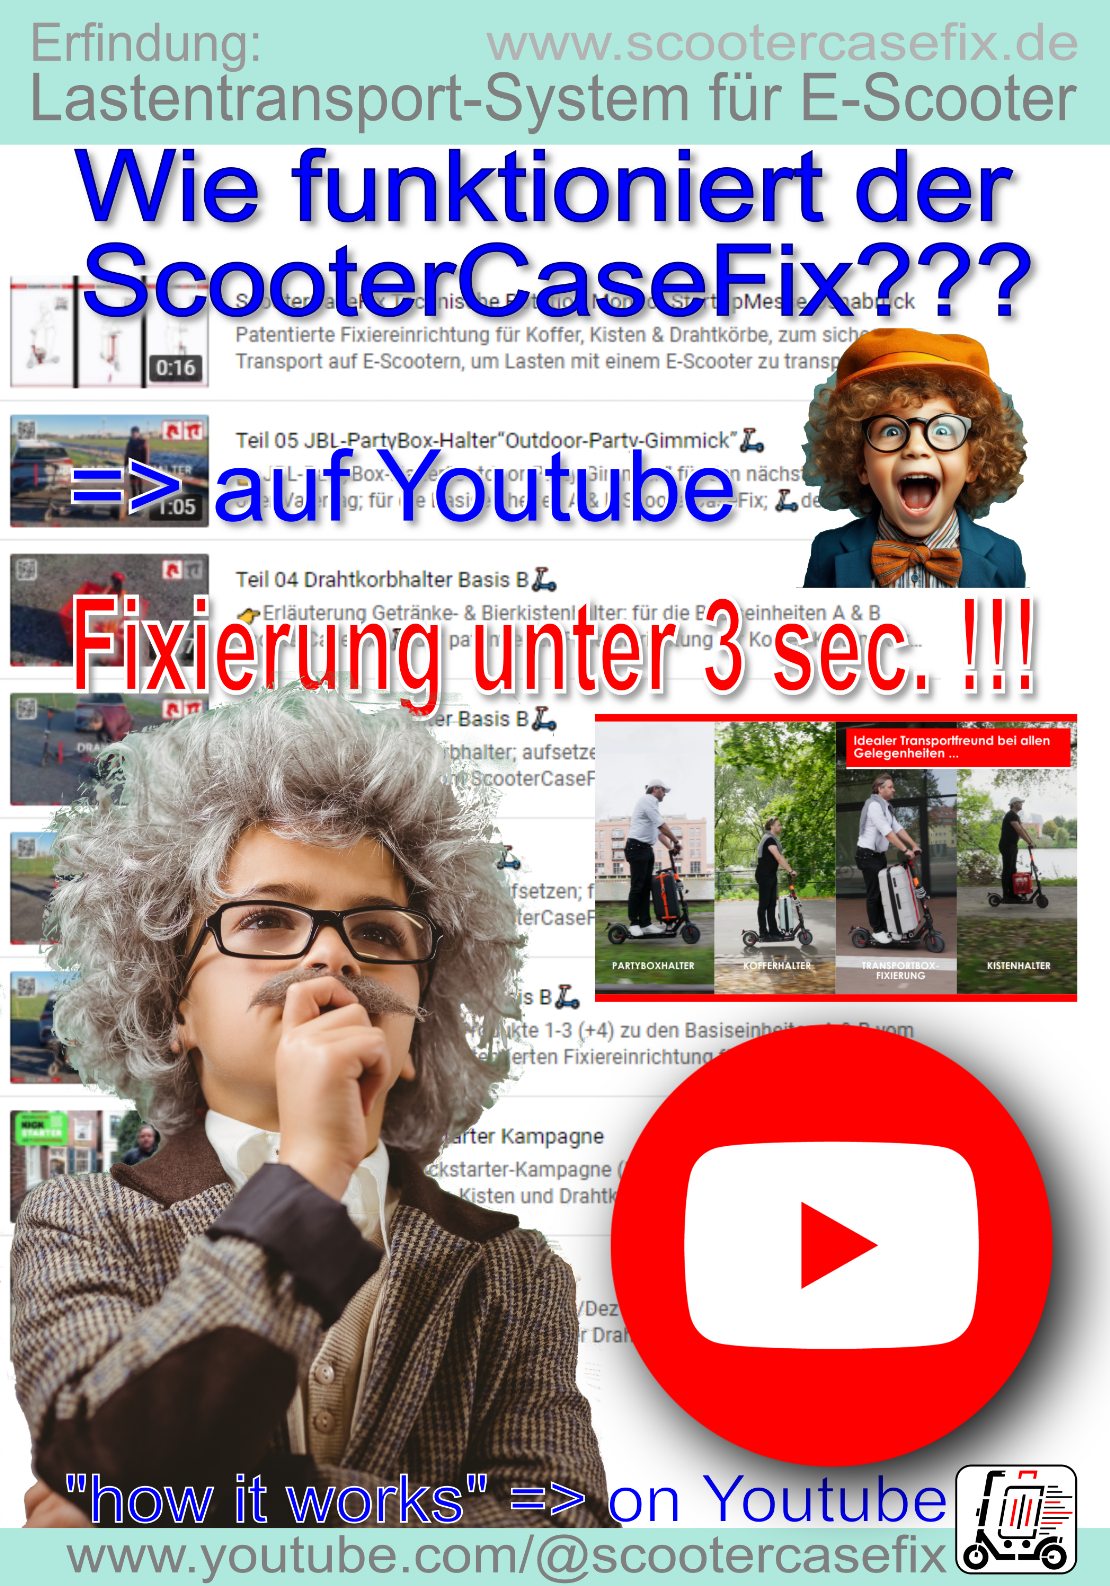 ScooterCaseFix in 60 sec erklärt